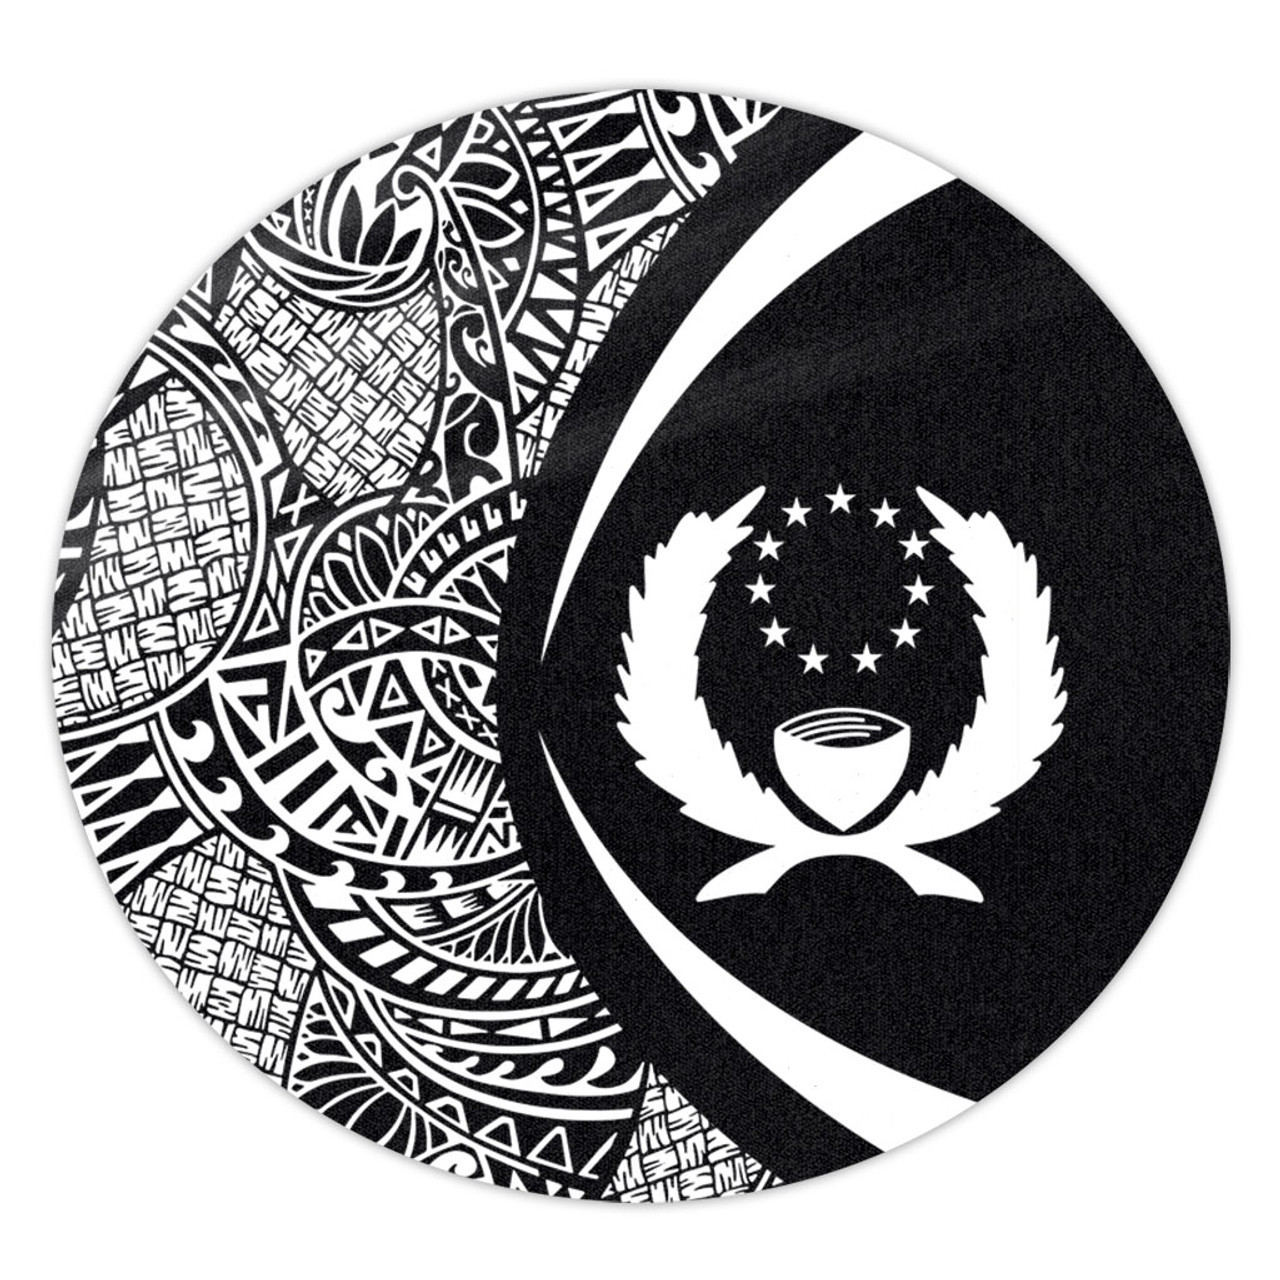 Pohnpei State Round Rug Lauhala White Circle Style